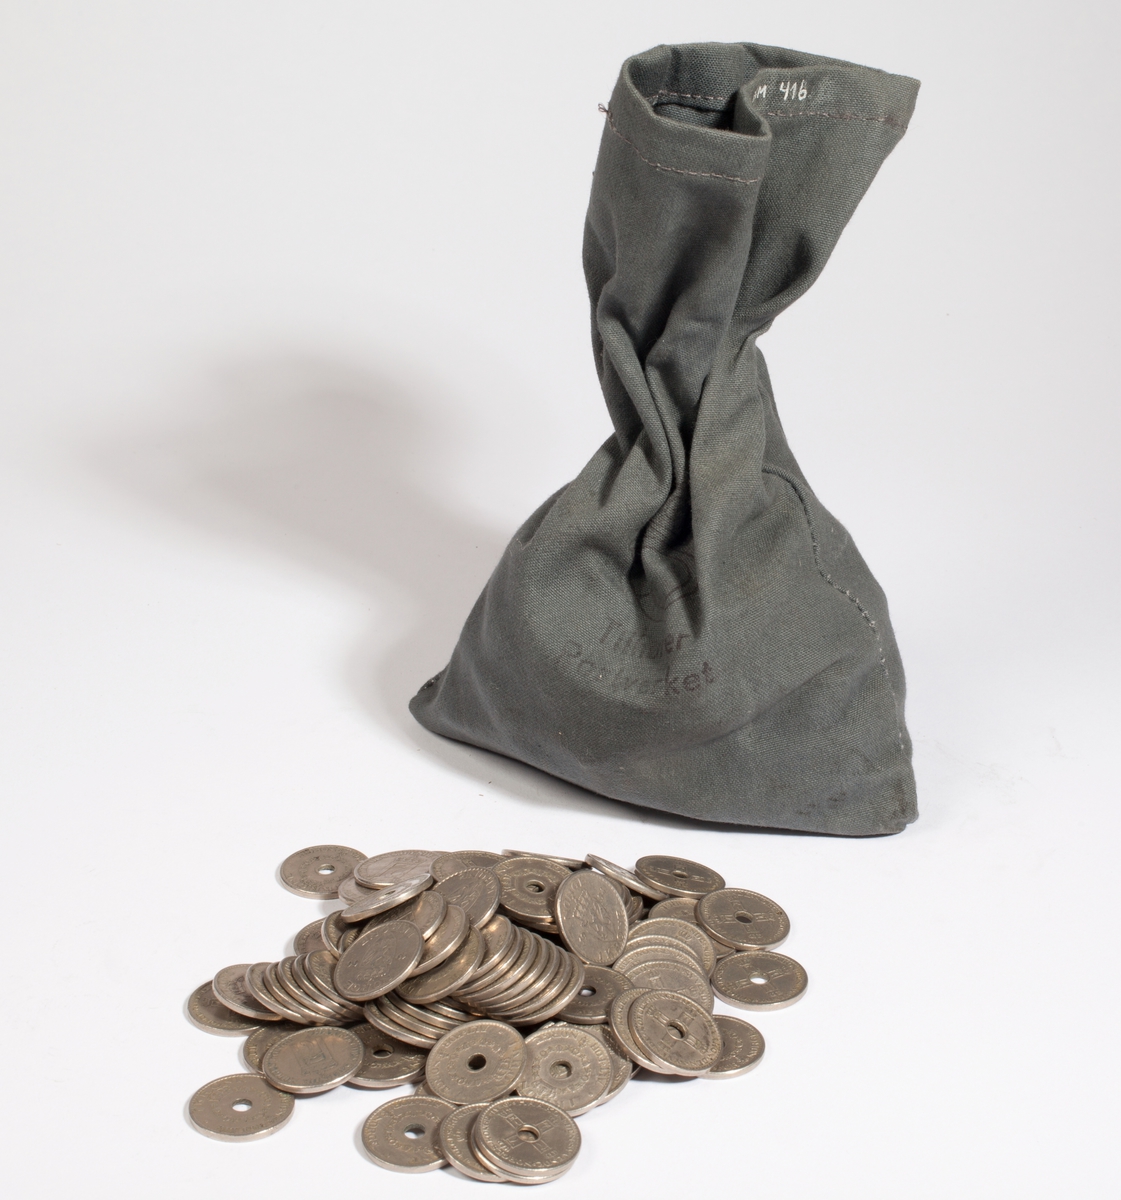 Avlang pose i stoff som inneholder 499 stk 1 krones mynt.